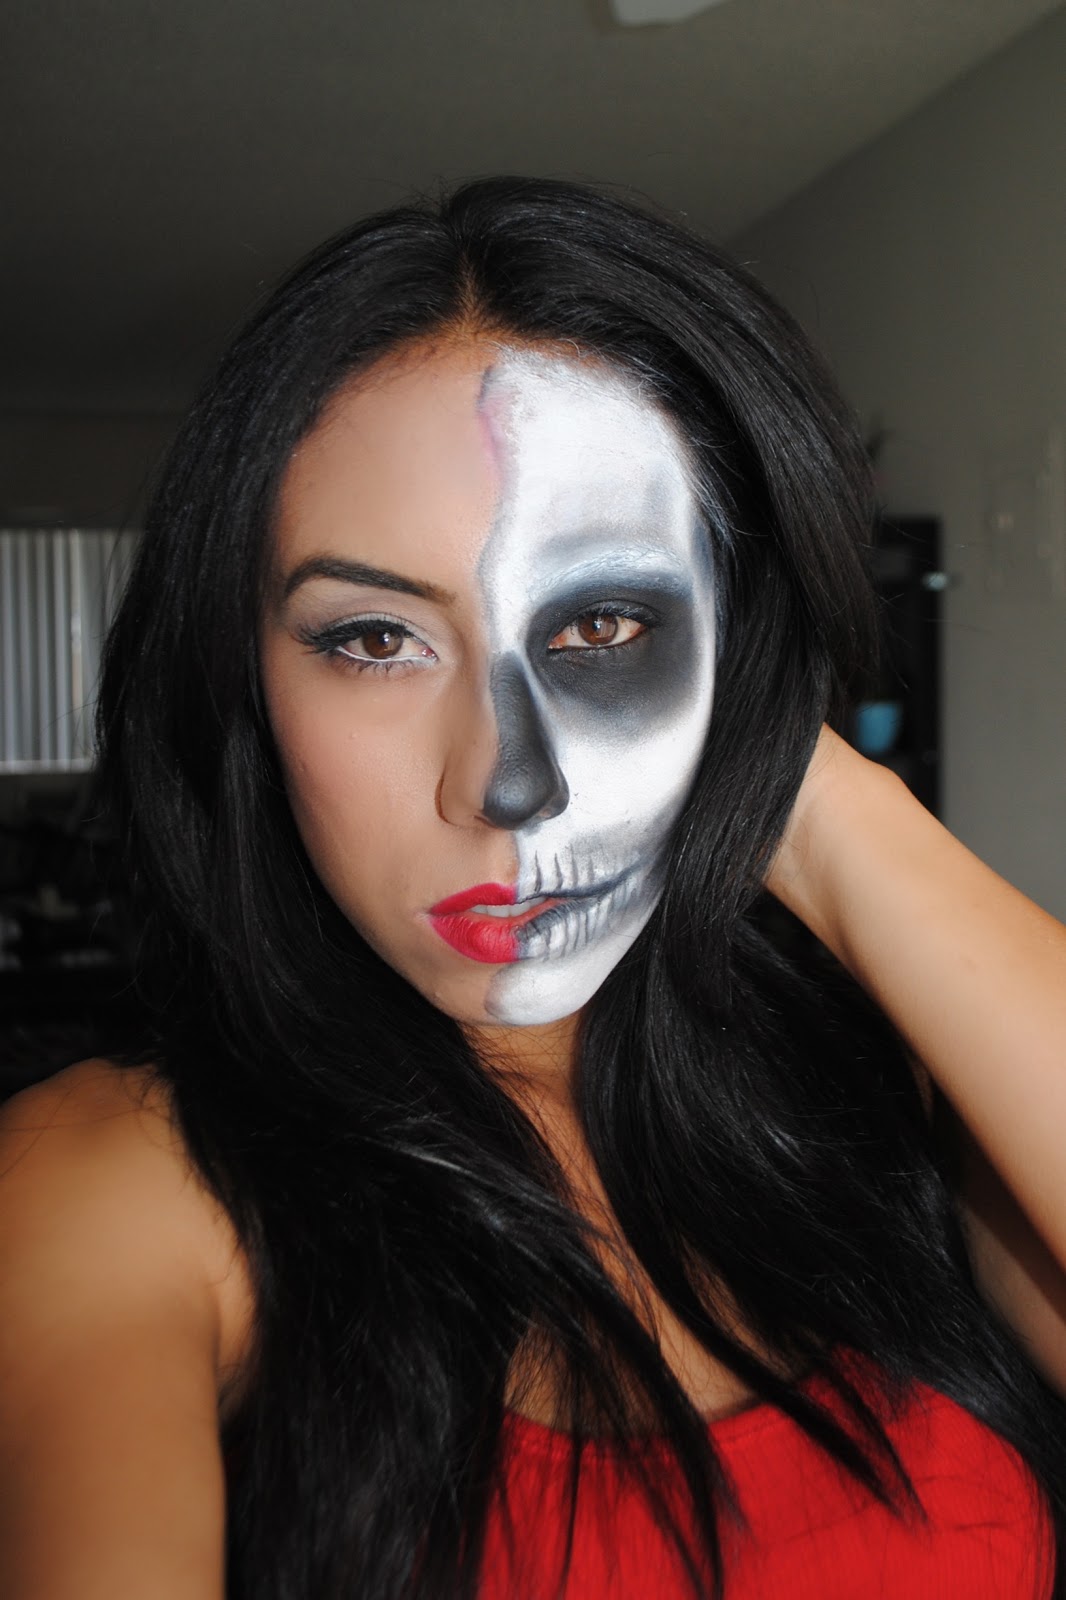 Pictures Of Half Face Halloween Makeup